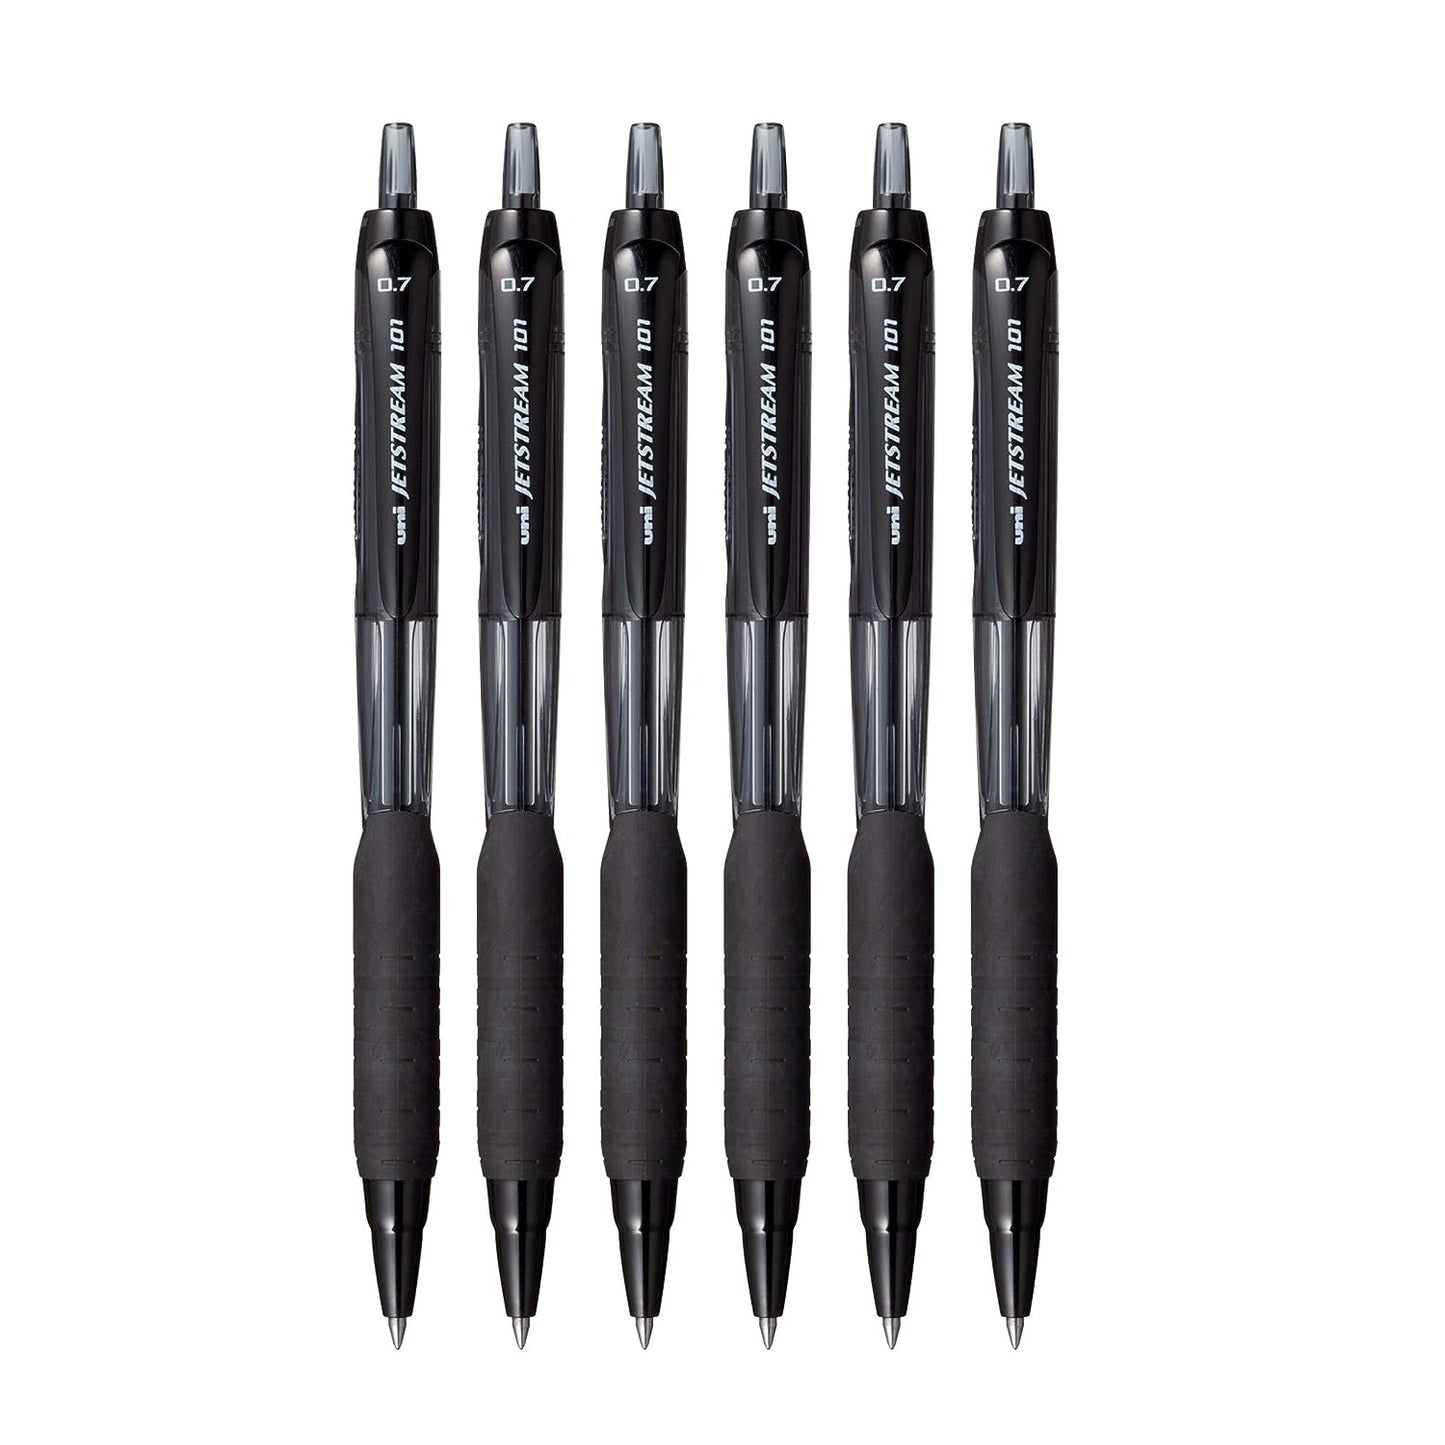 UniBall Jetstream Sxn101 Roller Ball Pen - Black Ink